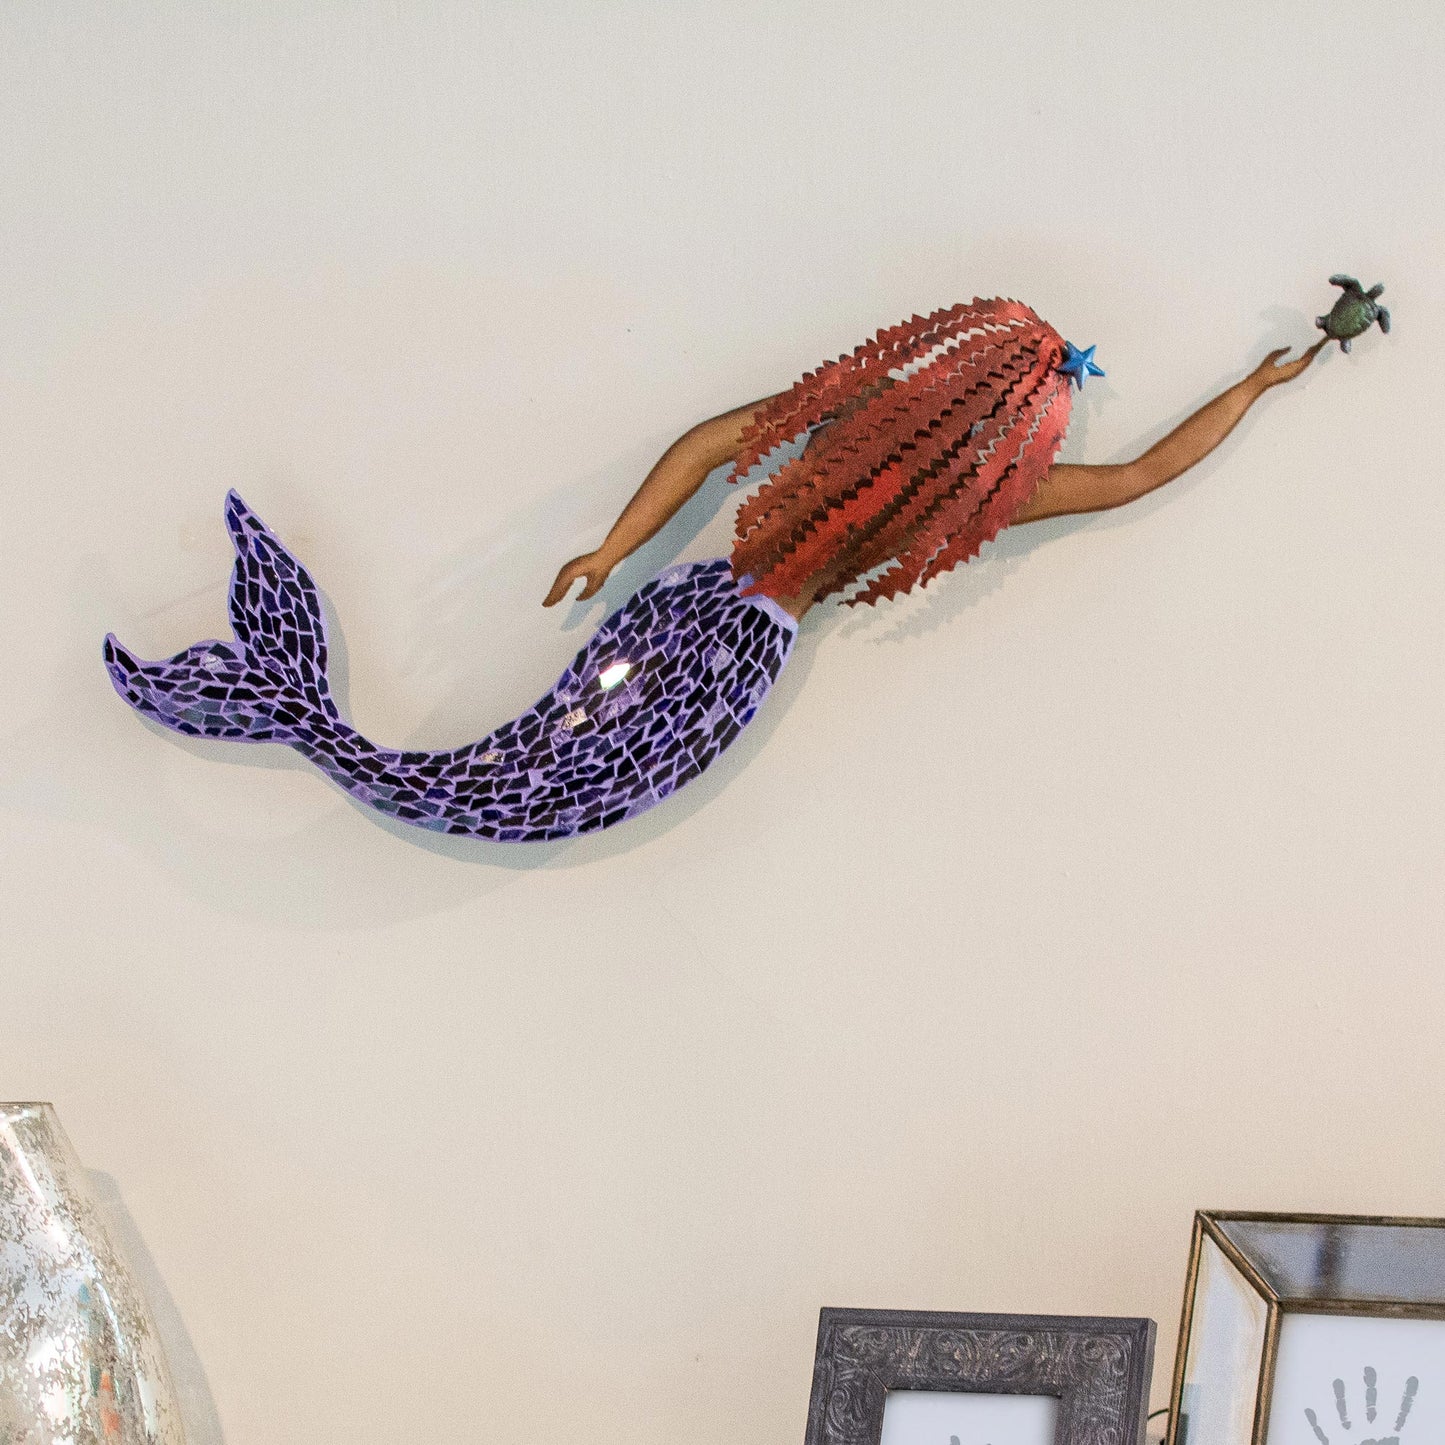 Mermaid and Turtle Handmade Iron and Glass Mosaic Mermaid Wall Sculpture